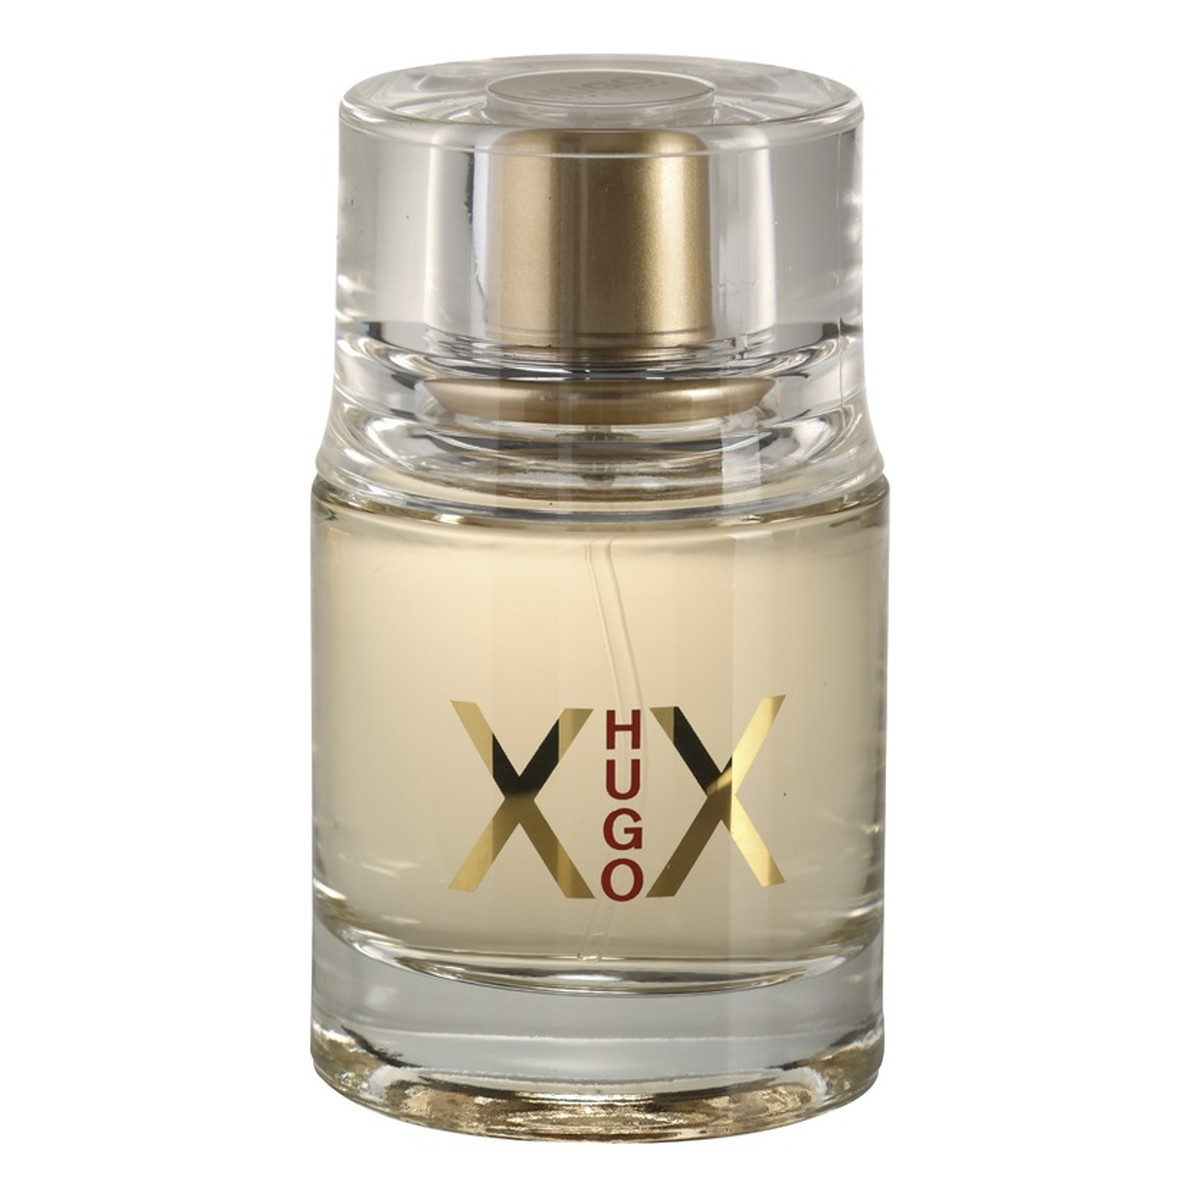 Hugo Boss Hugo XX Woman Woda Perfumowana Spray 60ml